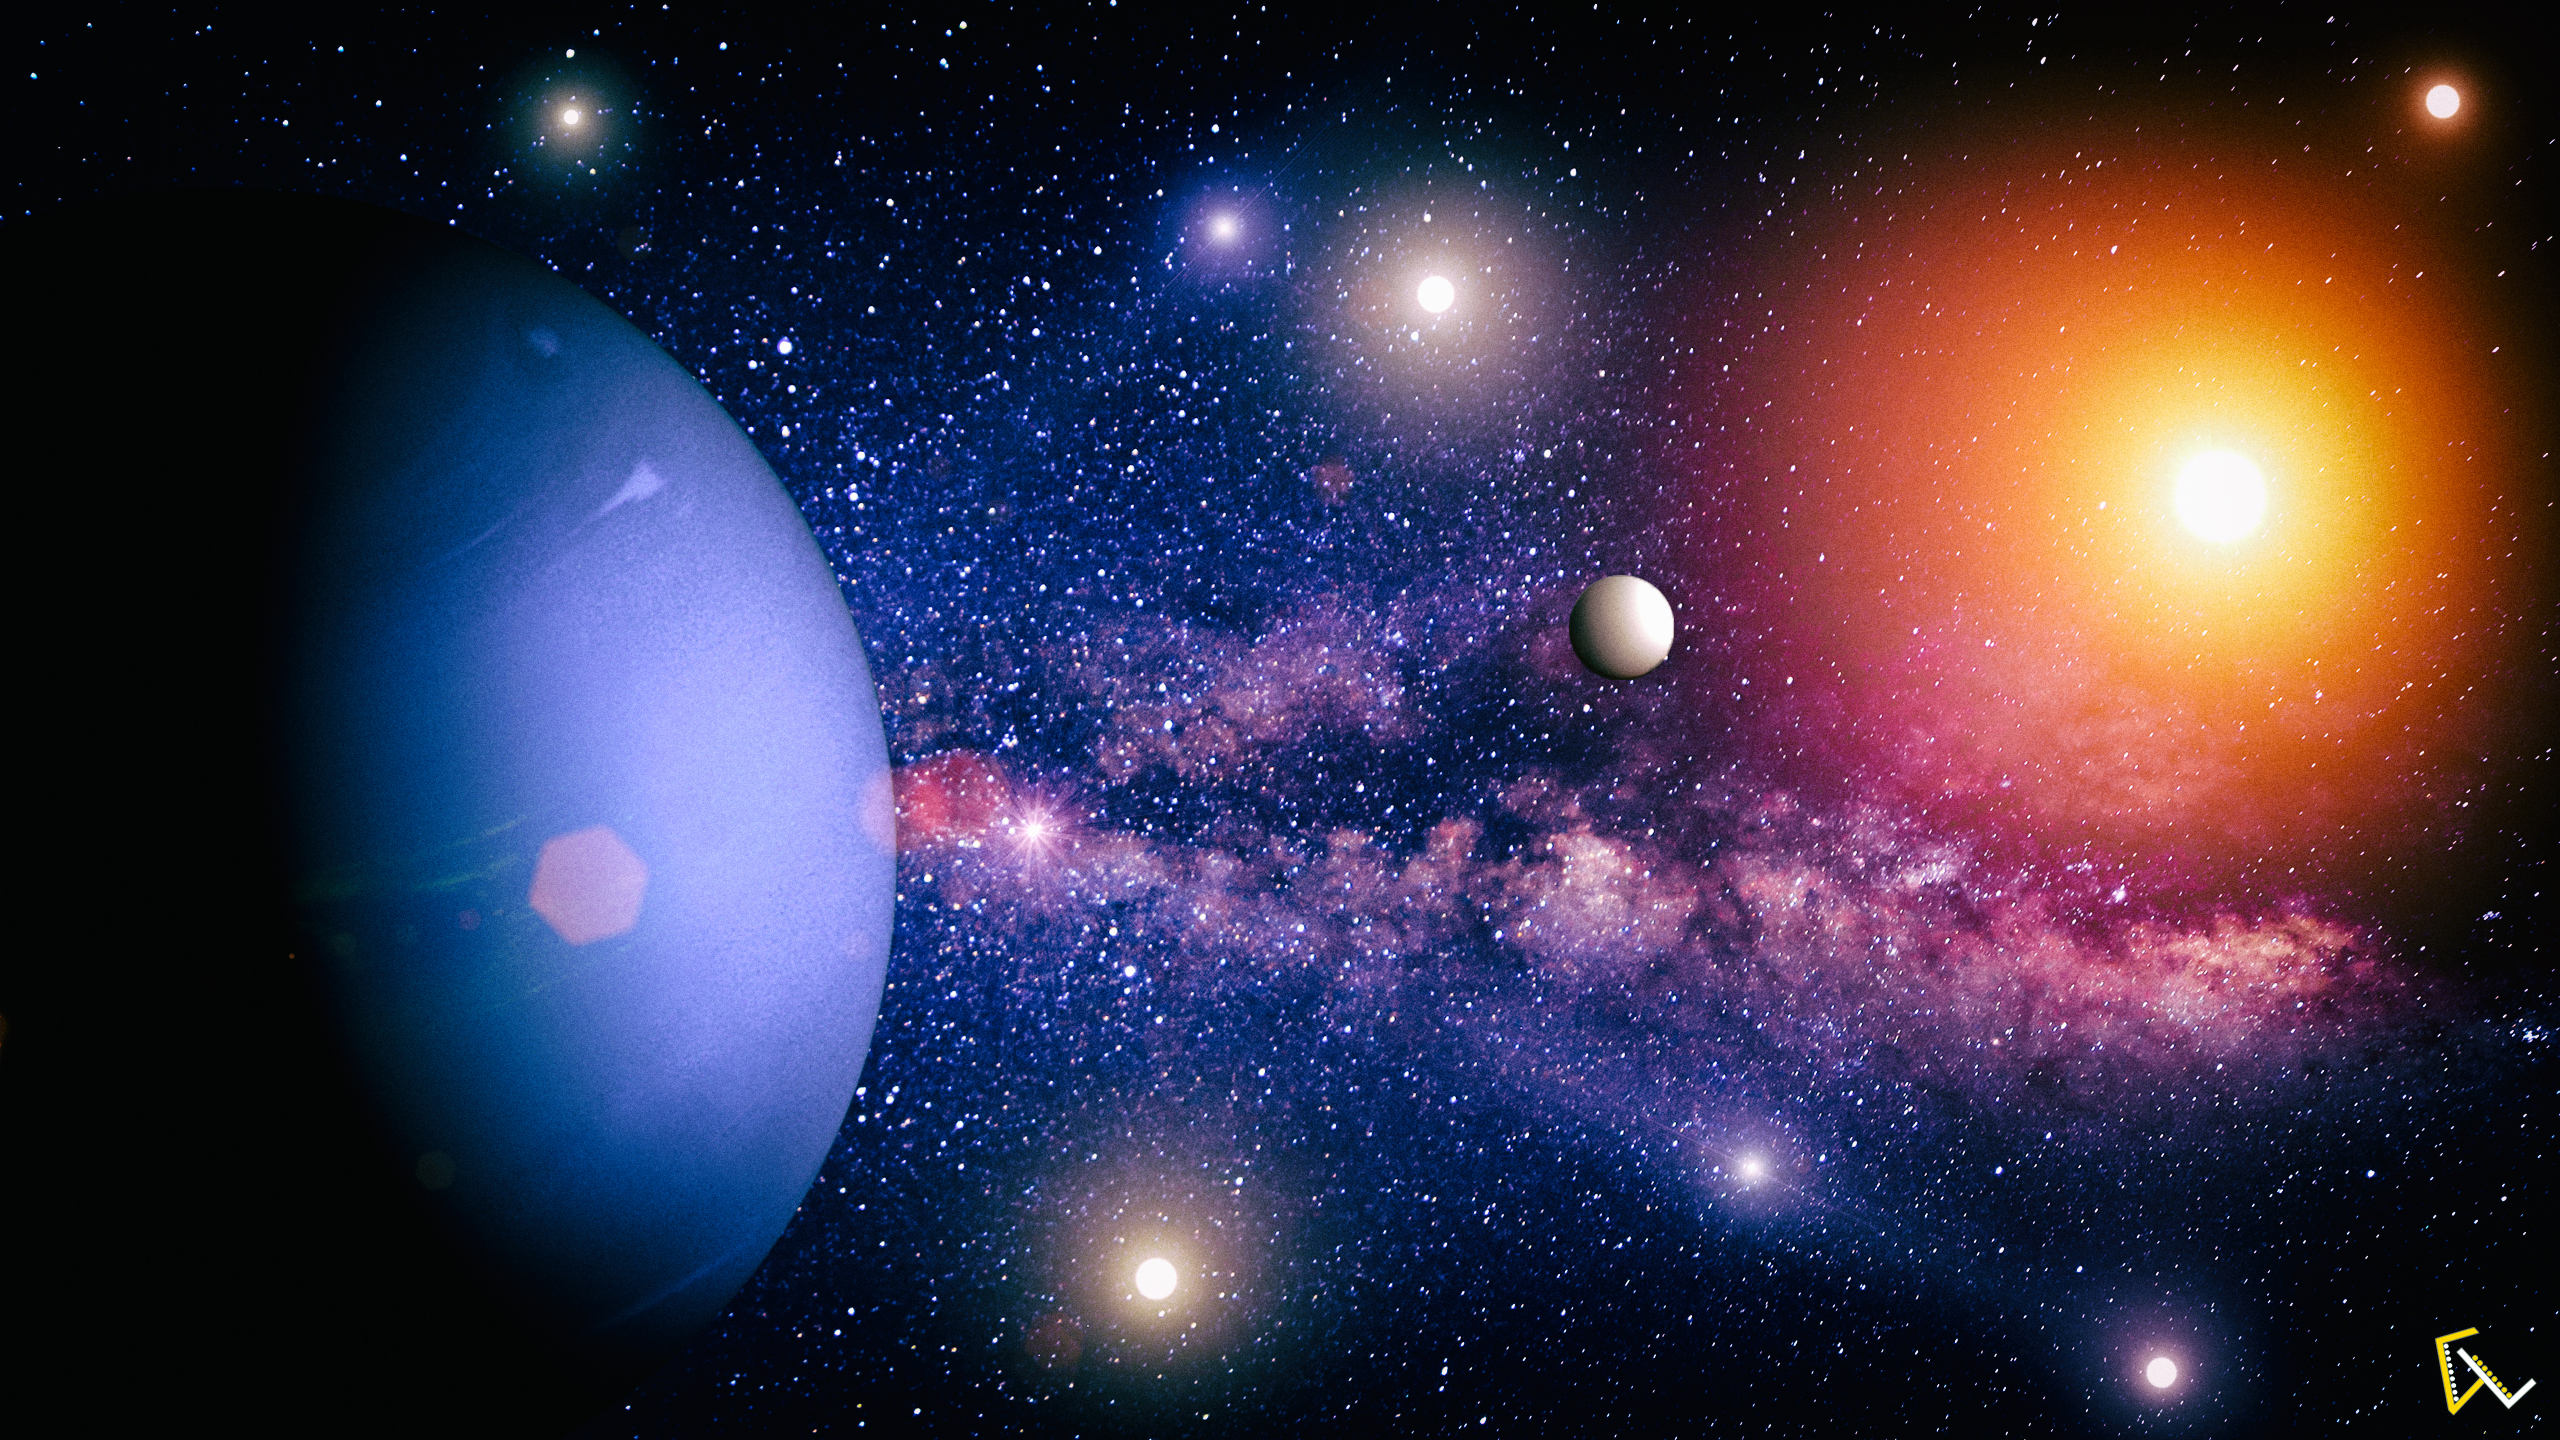 General 2560x1440 space planet Neptune sun rays lens flare stars photoshopped CGI digital art